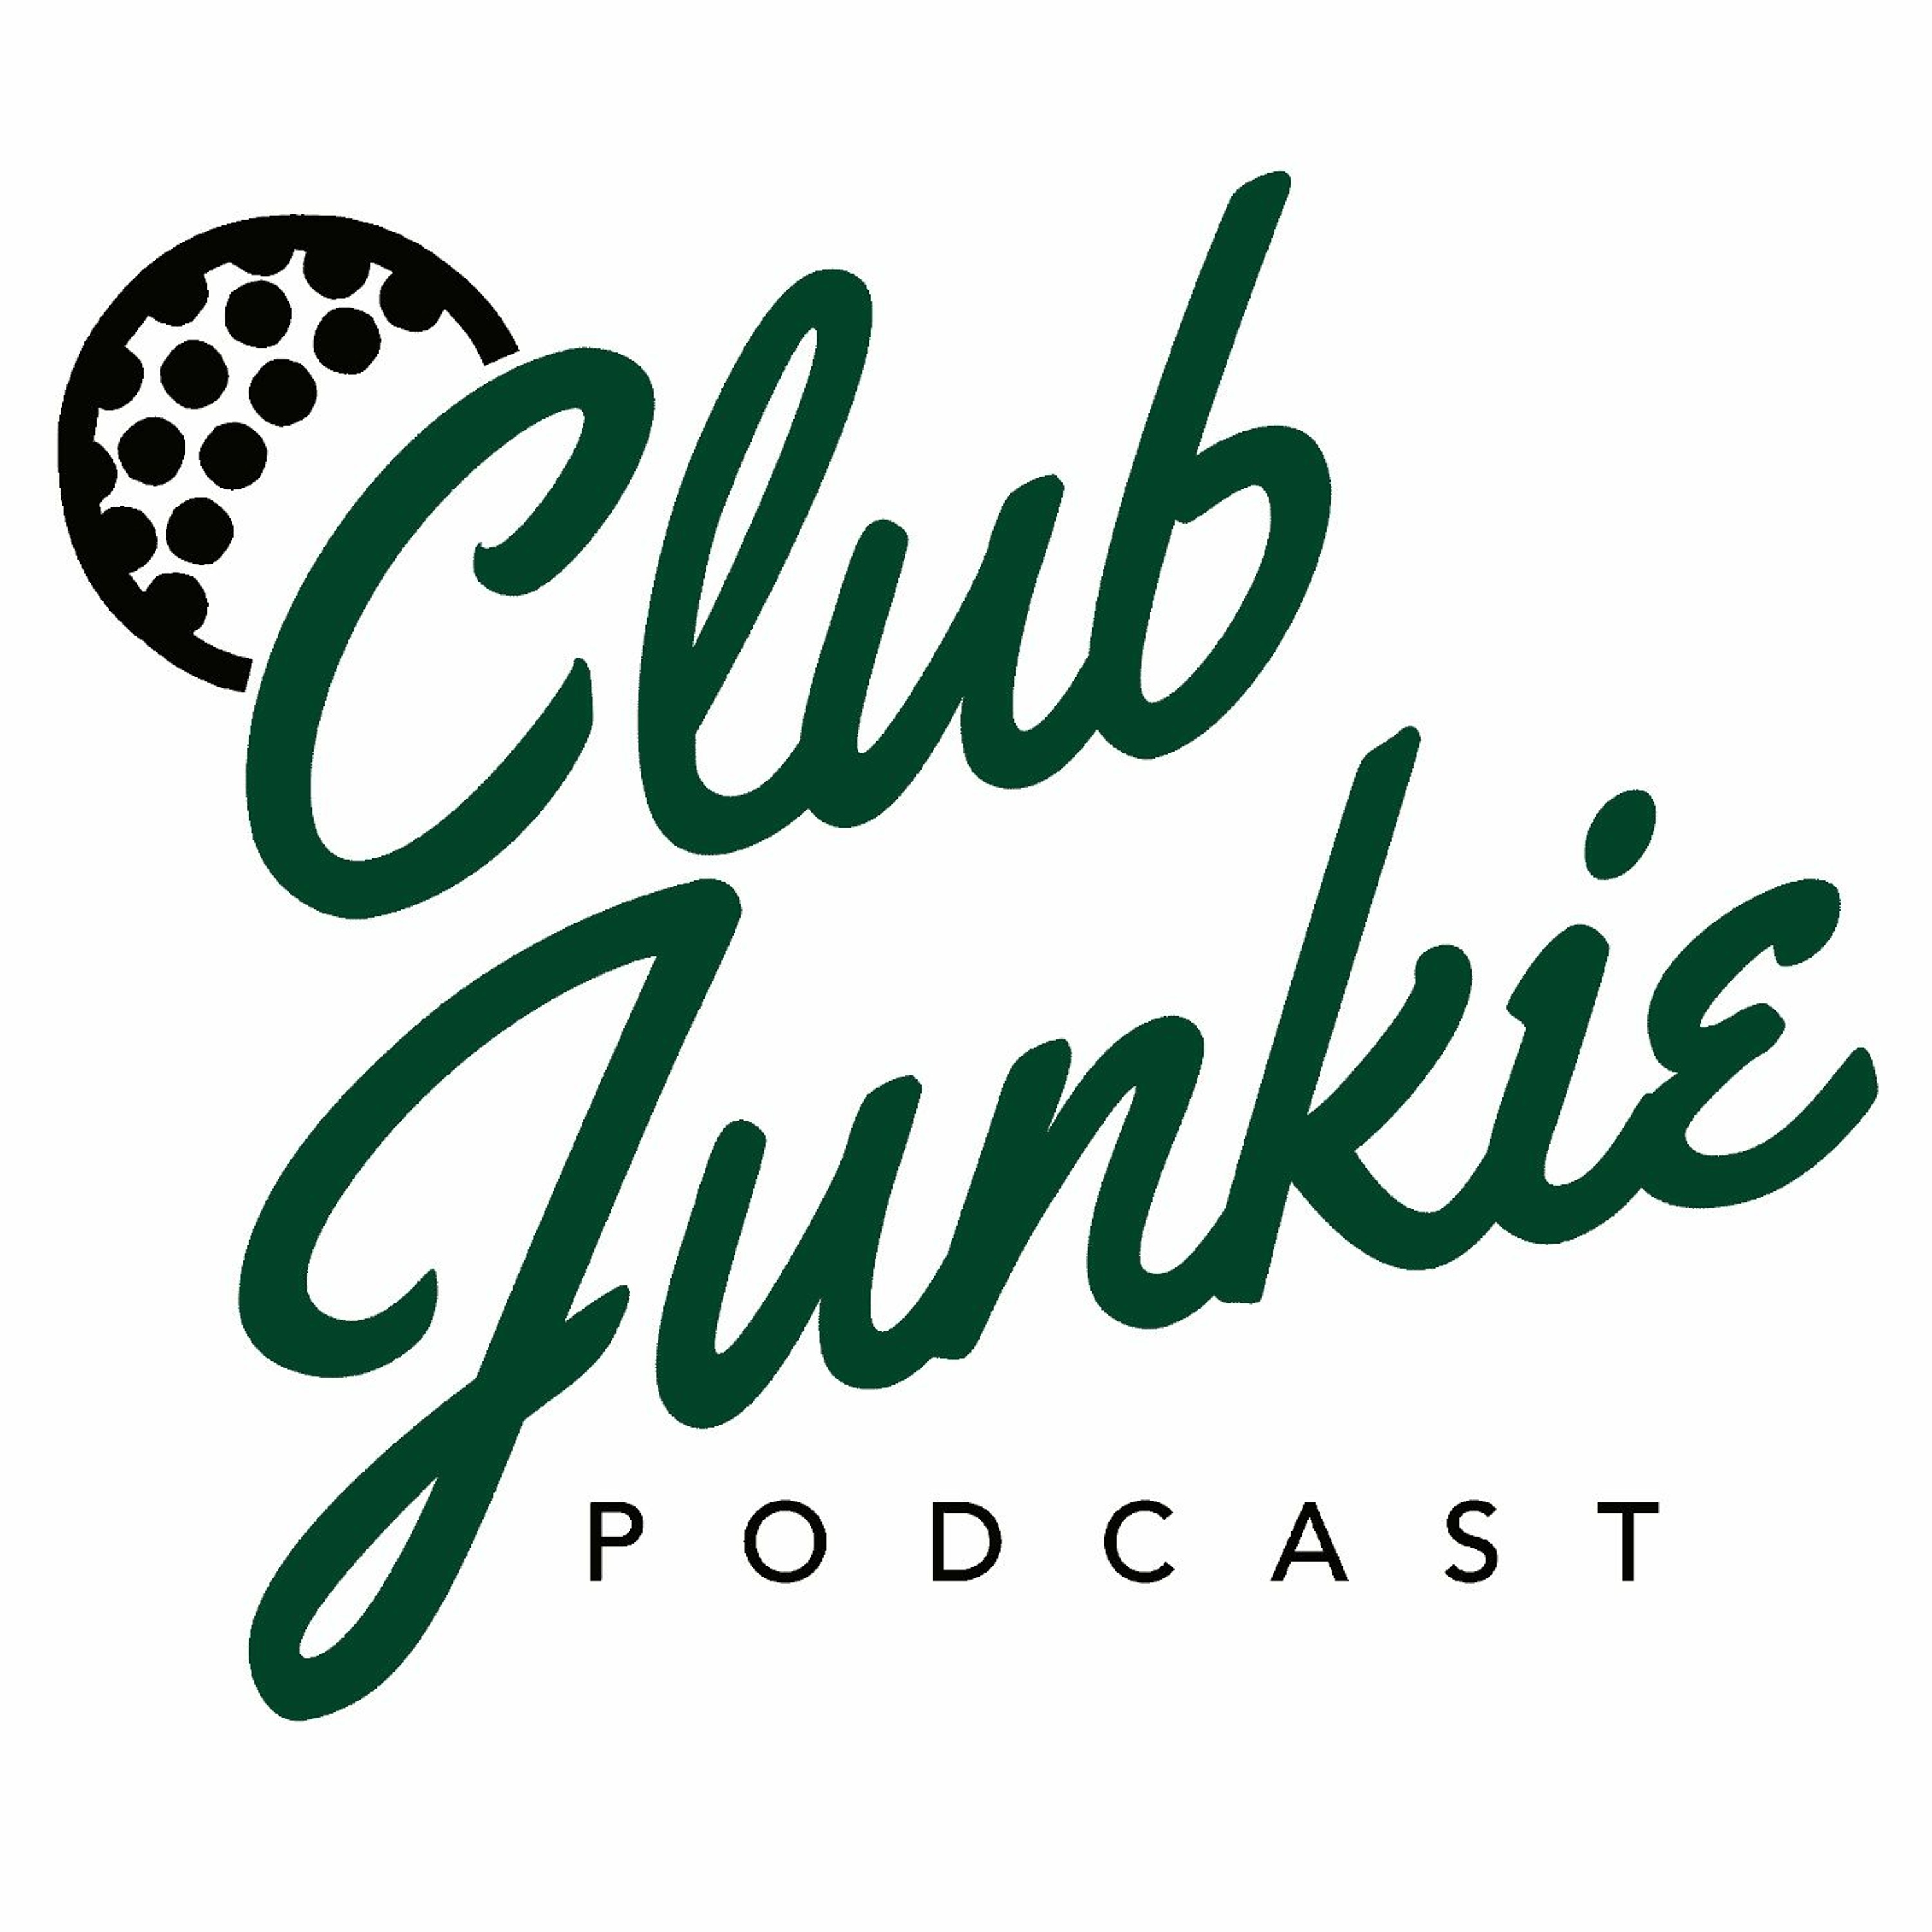 Club Junkie: PXG 0317 CB Irons Review & My Favorite Adidas Golf Shoe